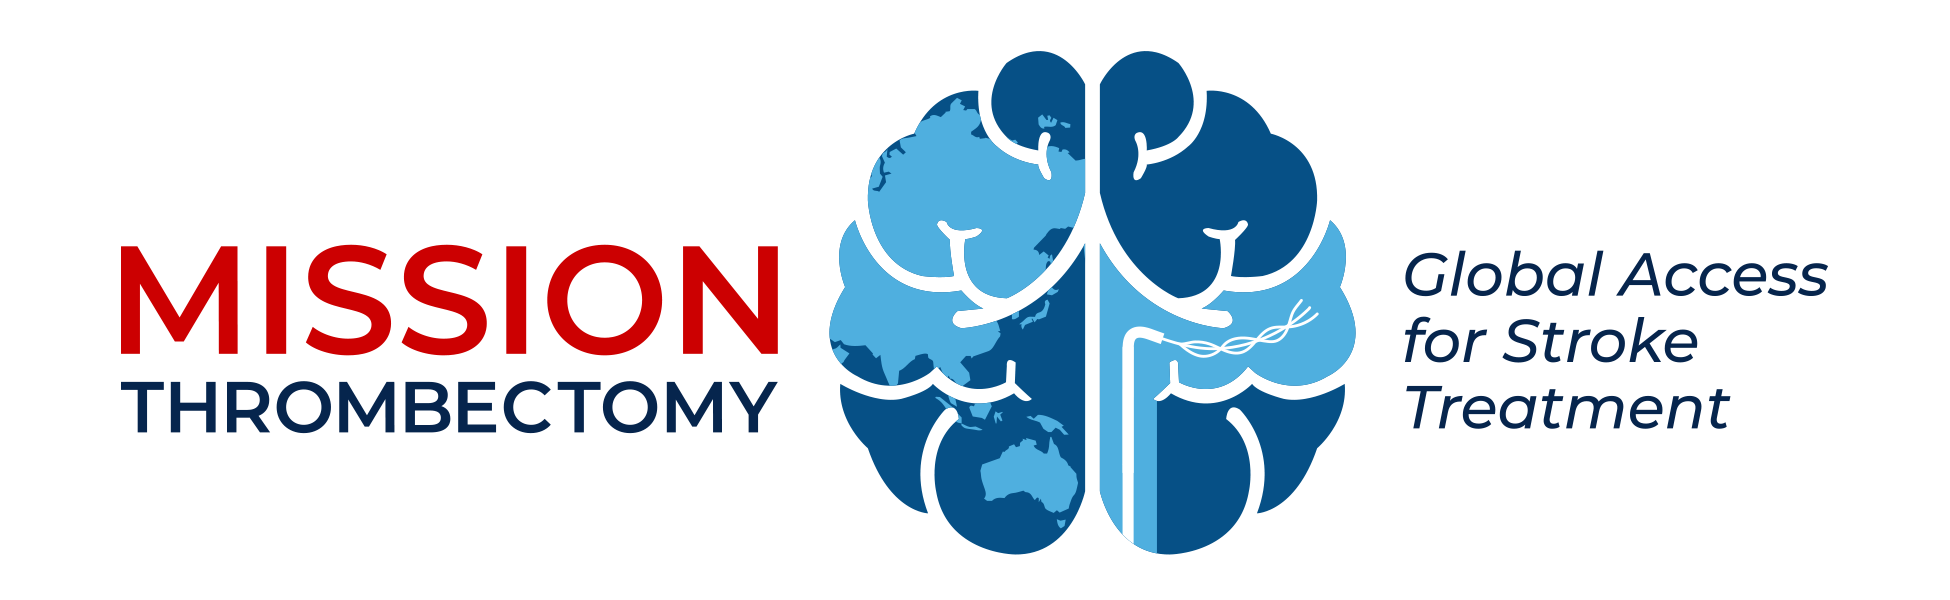 Mission Thrombectomy logo